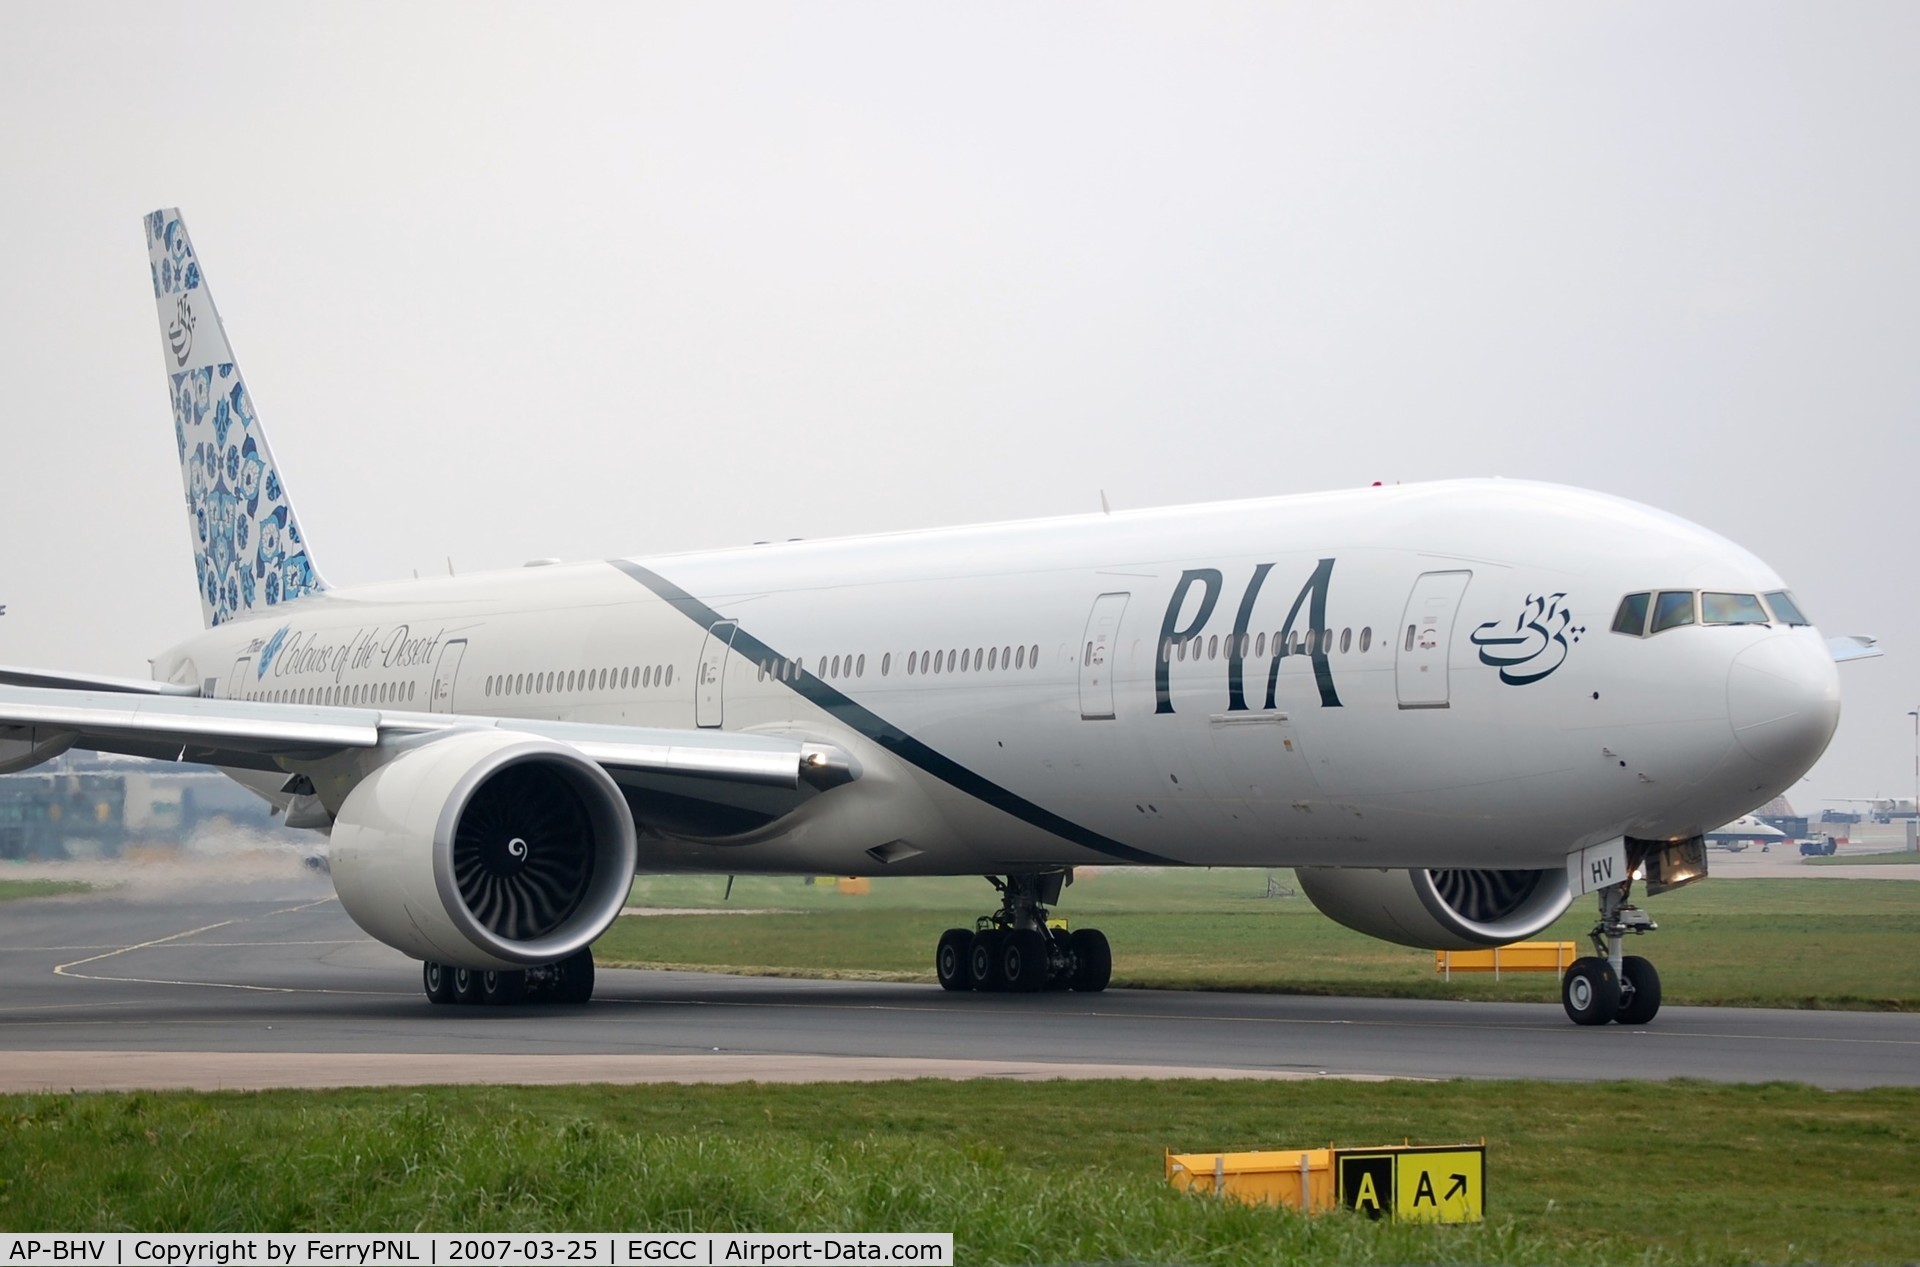 AP-BHV, 2006 Boeing 777-340/ER C/N 33778, Pakistan B773 taxying for departure